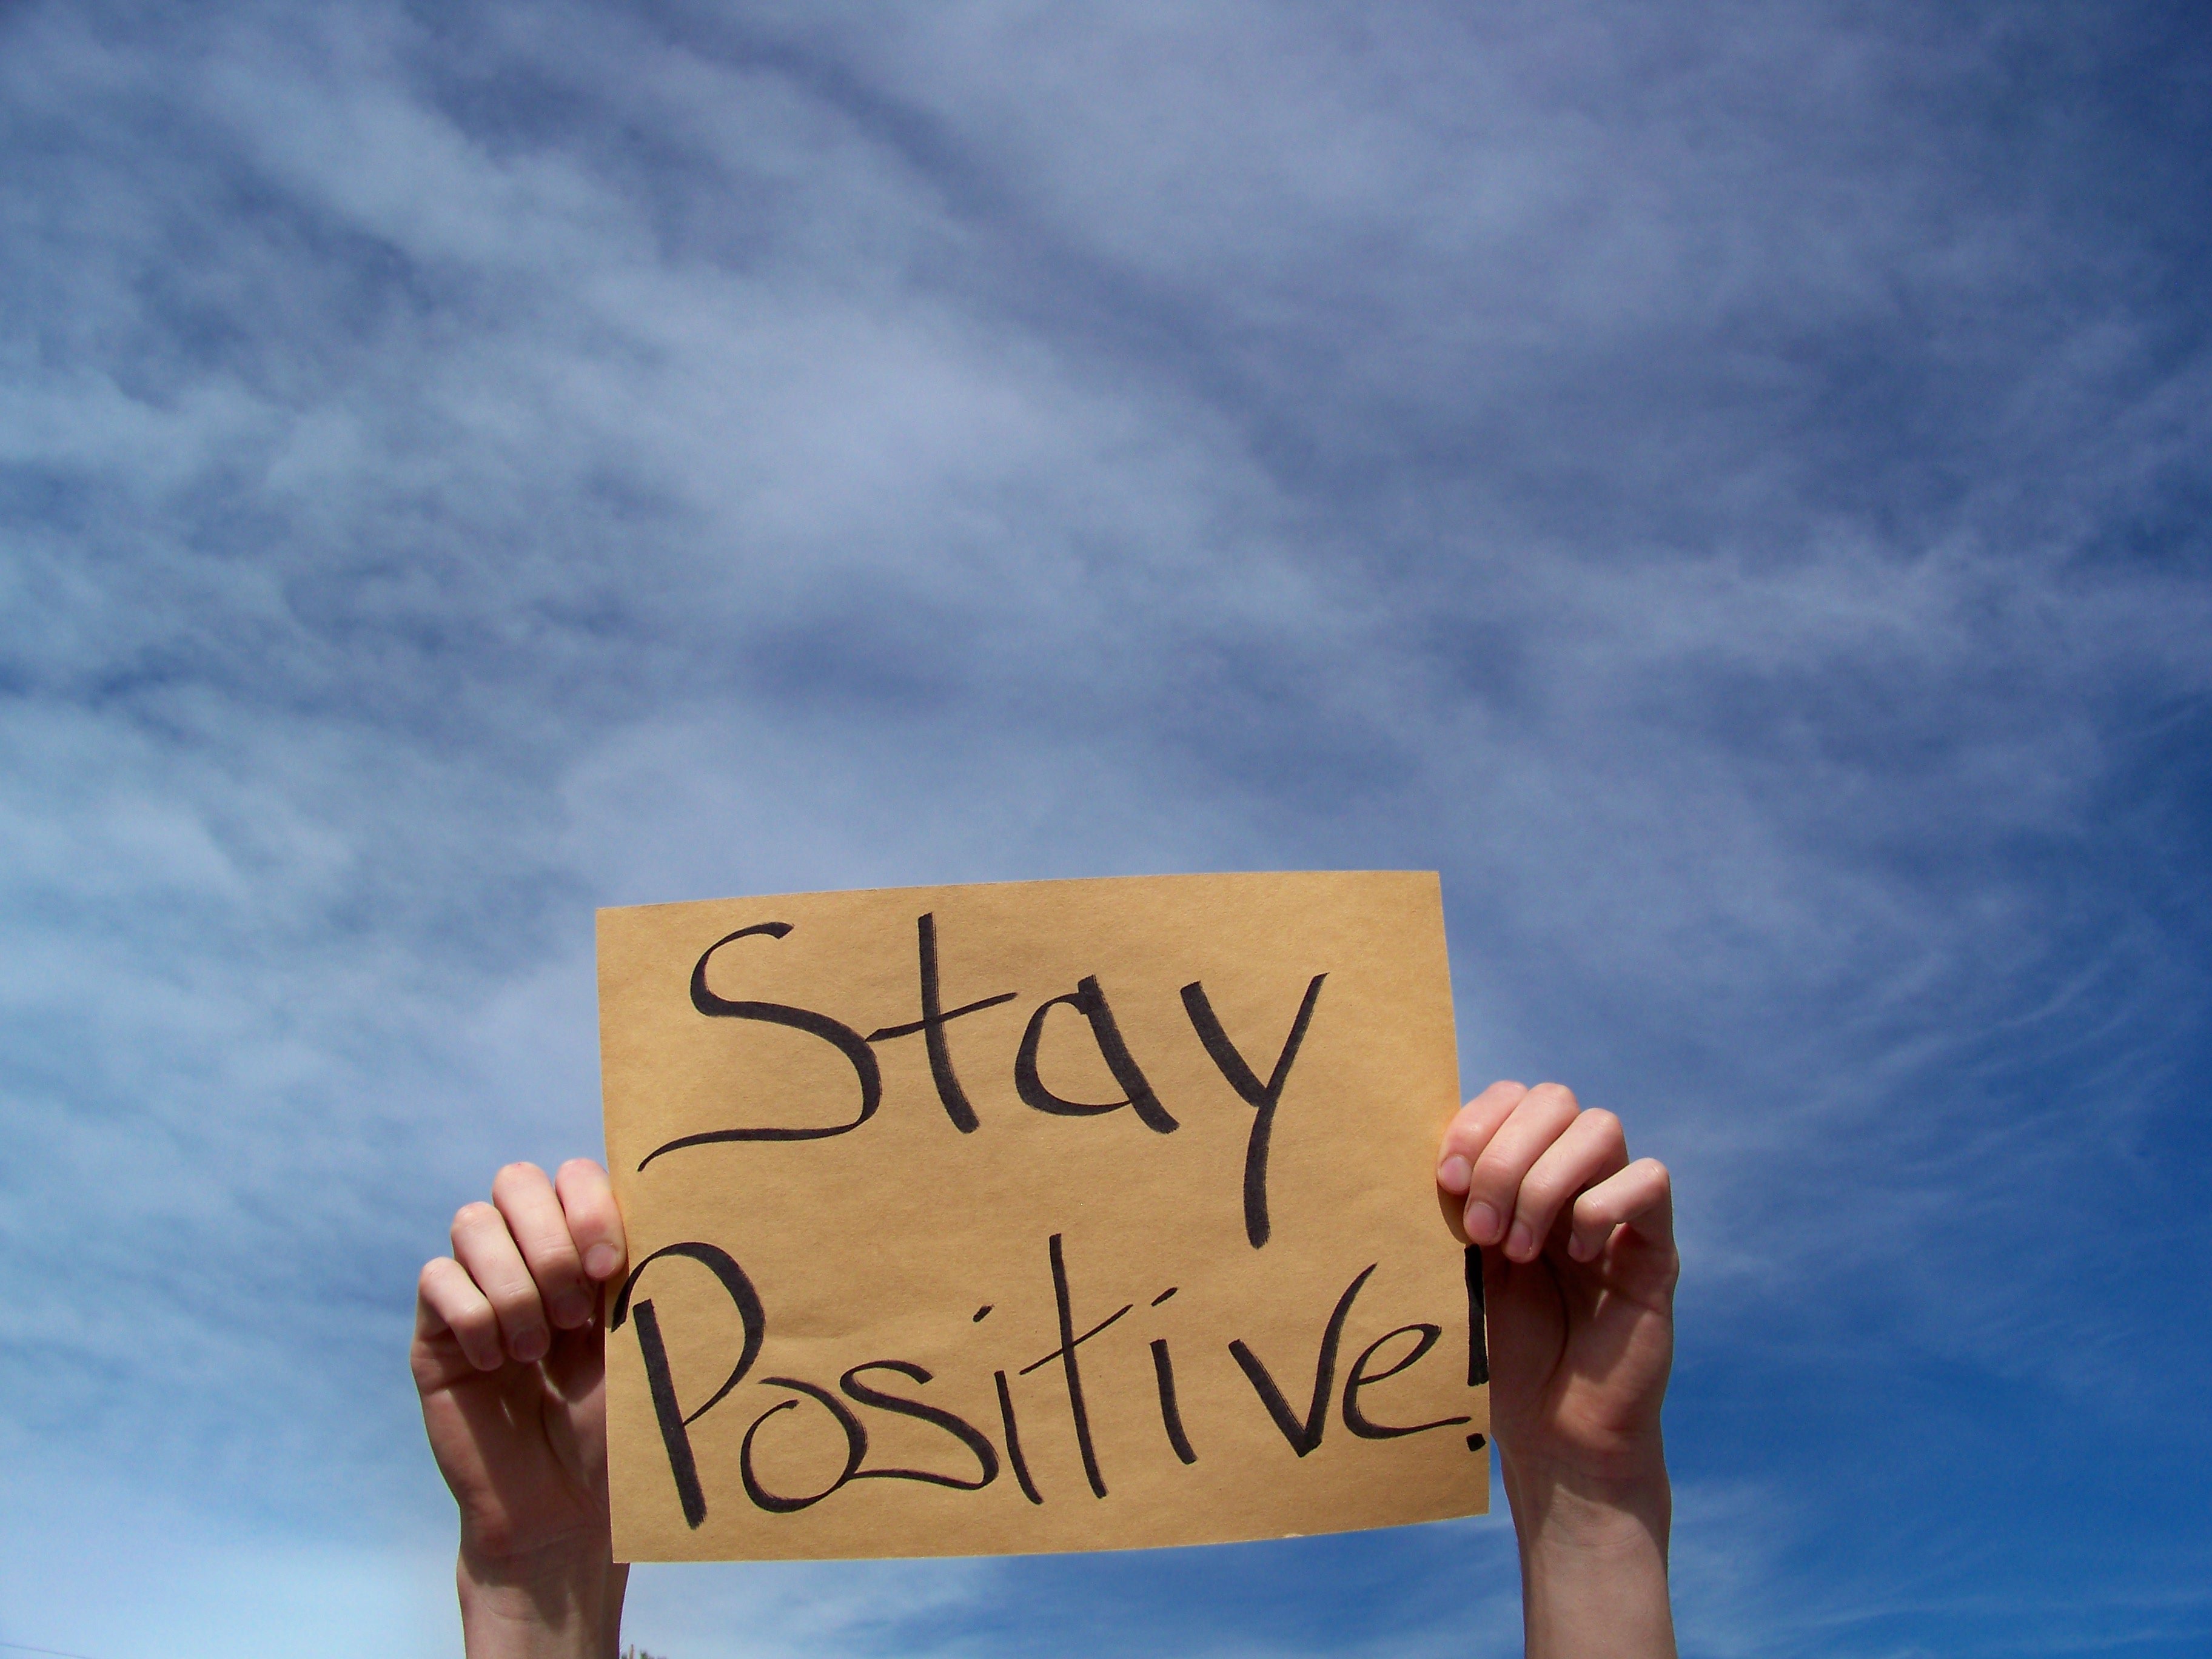 Life is positive. Позитив. Positive картинки. Think positive картинки. Stay positive картинки.